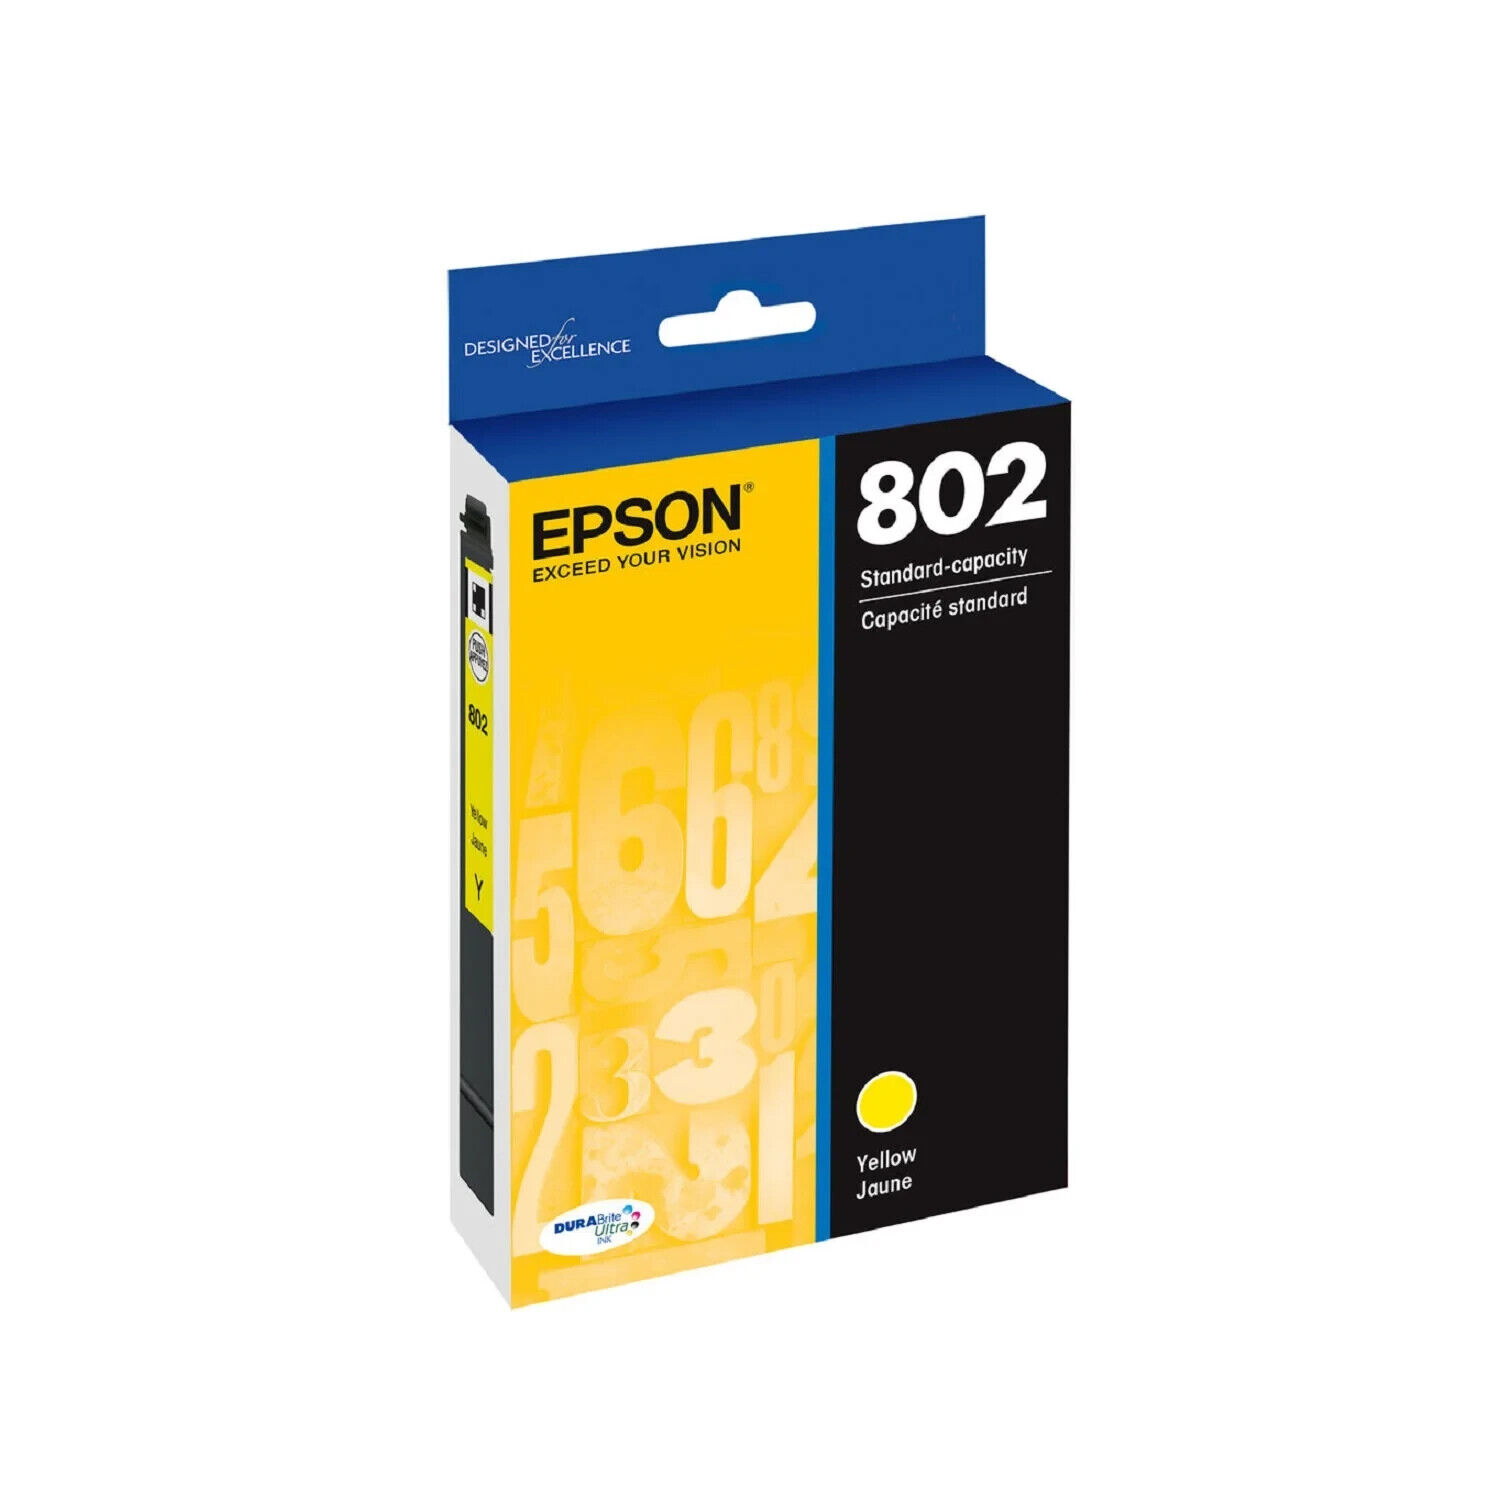 Genuine Epson 802 Yellow DURABrite Ink WF4734 WF4720 WF4730 WF4740 EXP 07/2023